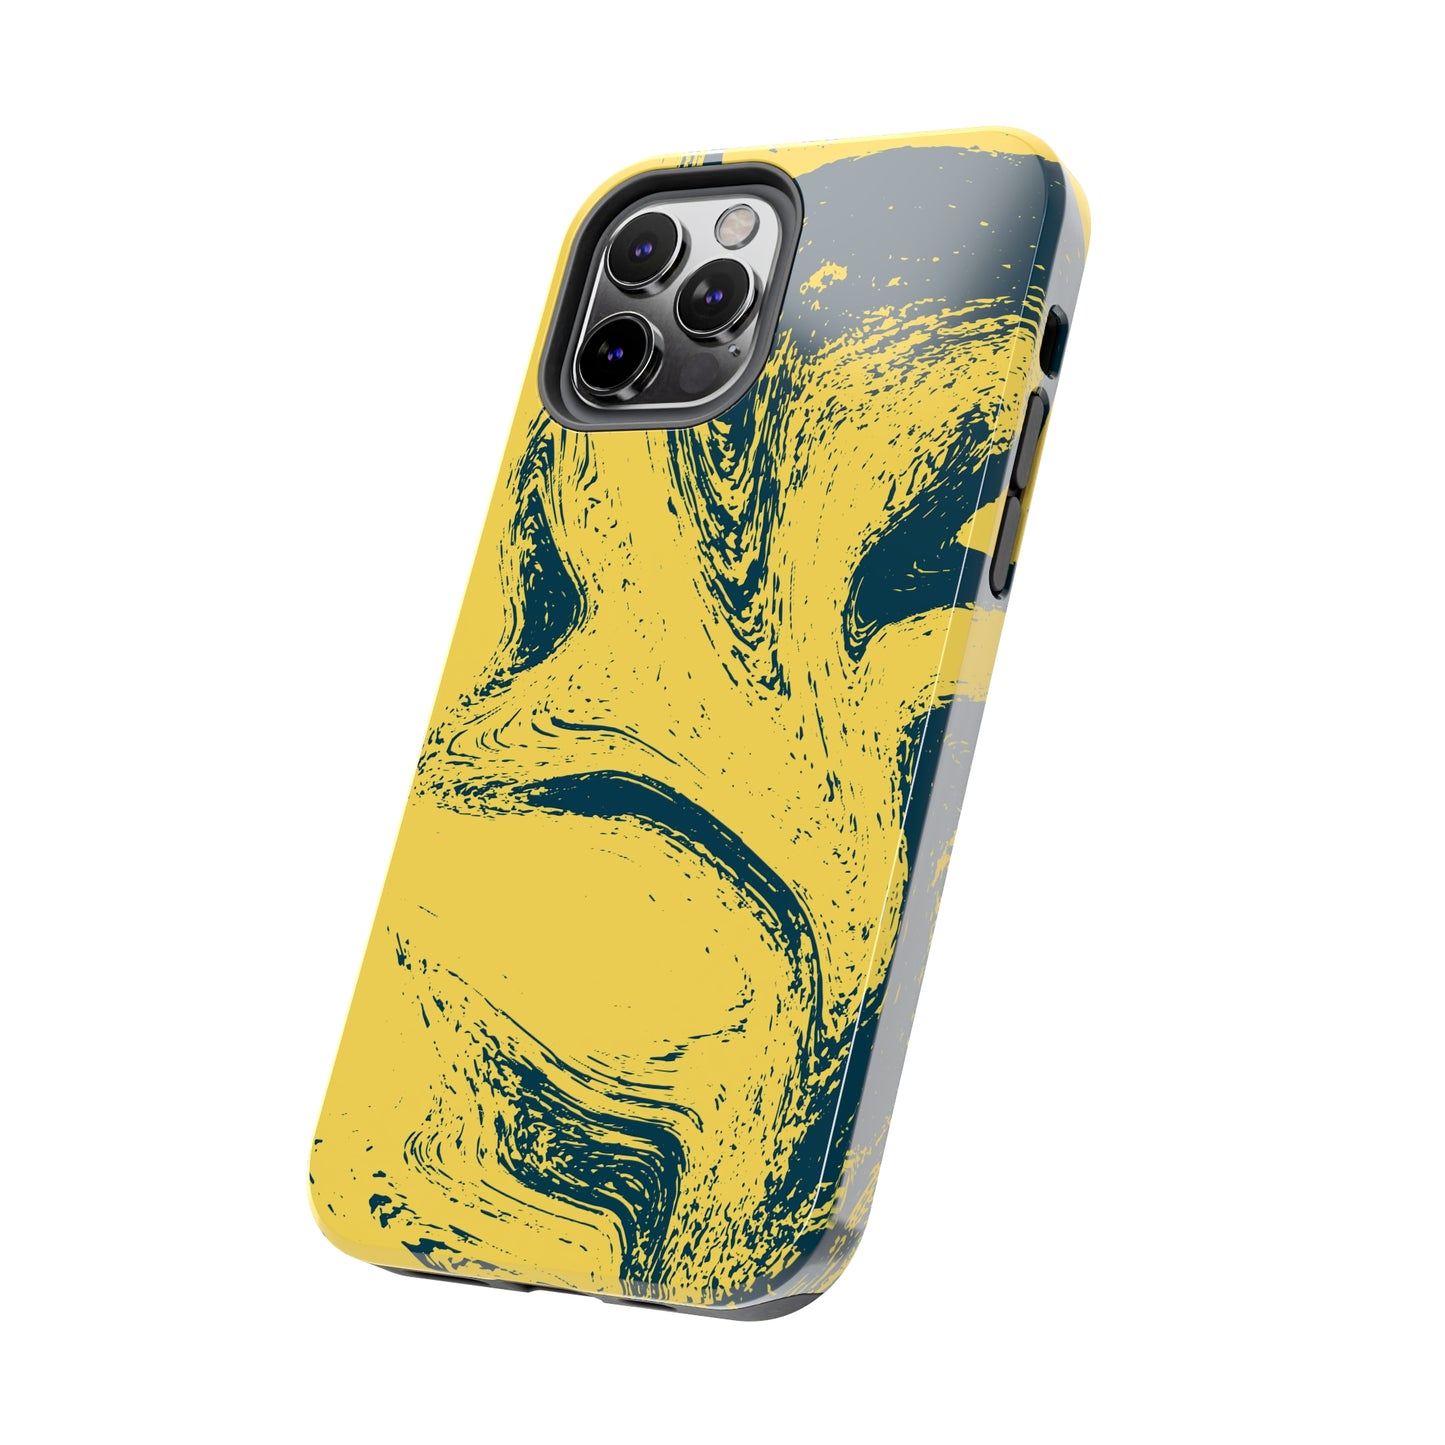 Vivid Abstract Swirl - iPhone Case